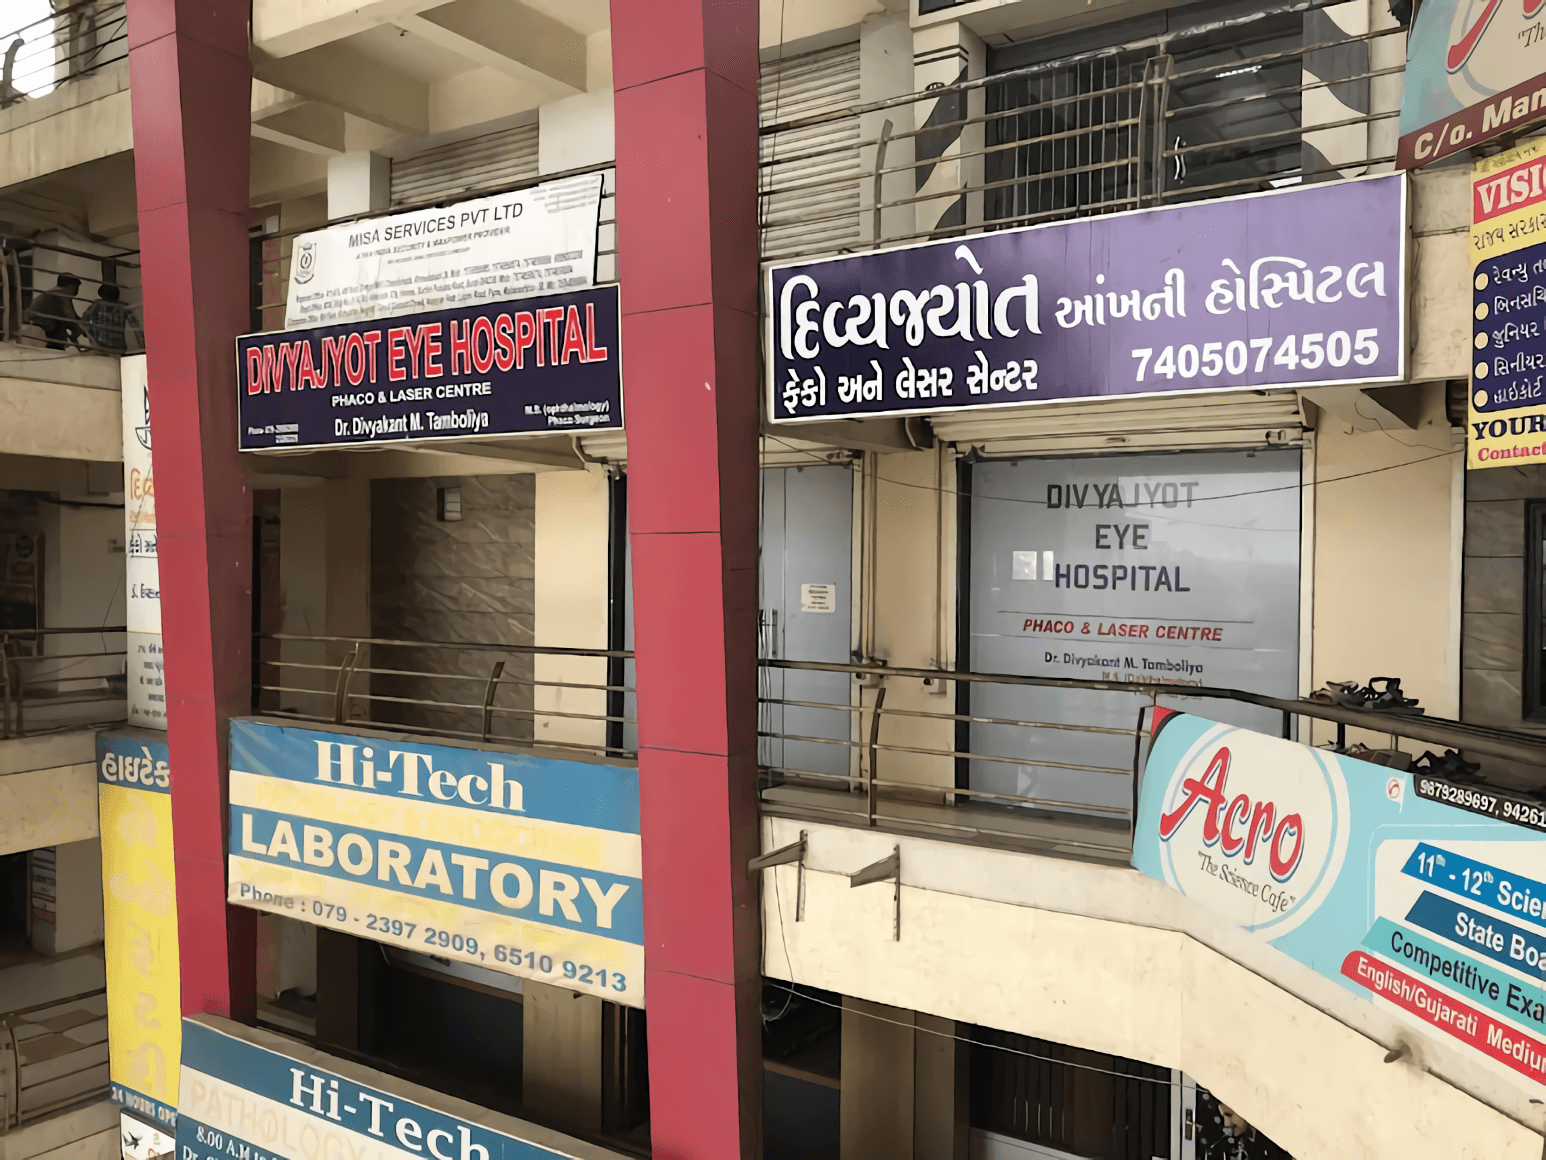 Divyajyot Eye Hospital